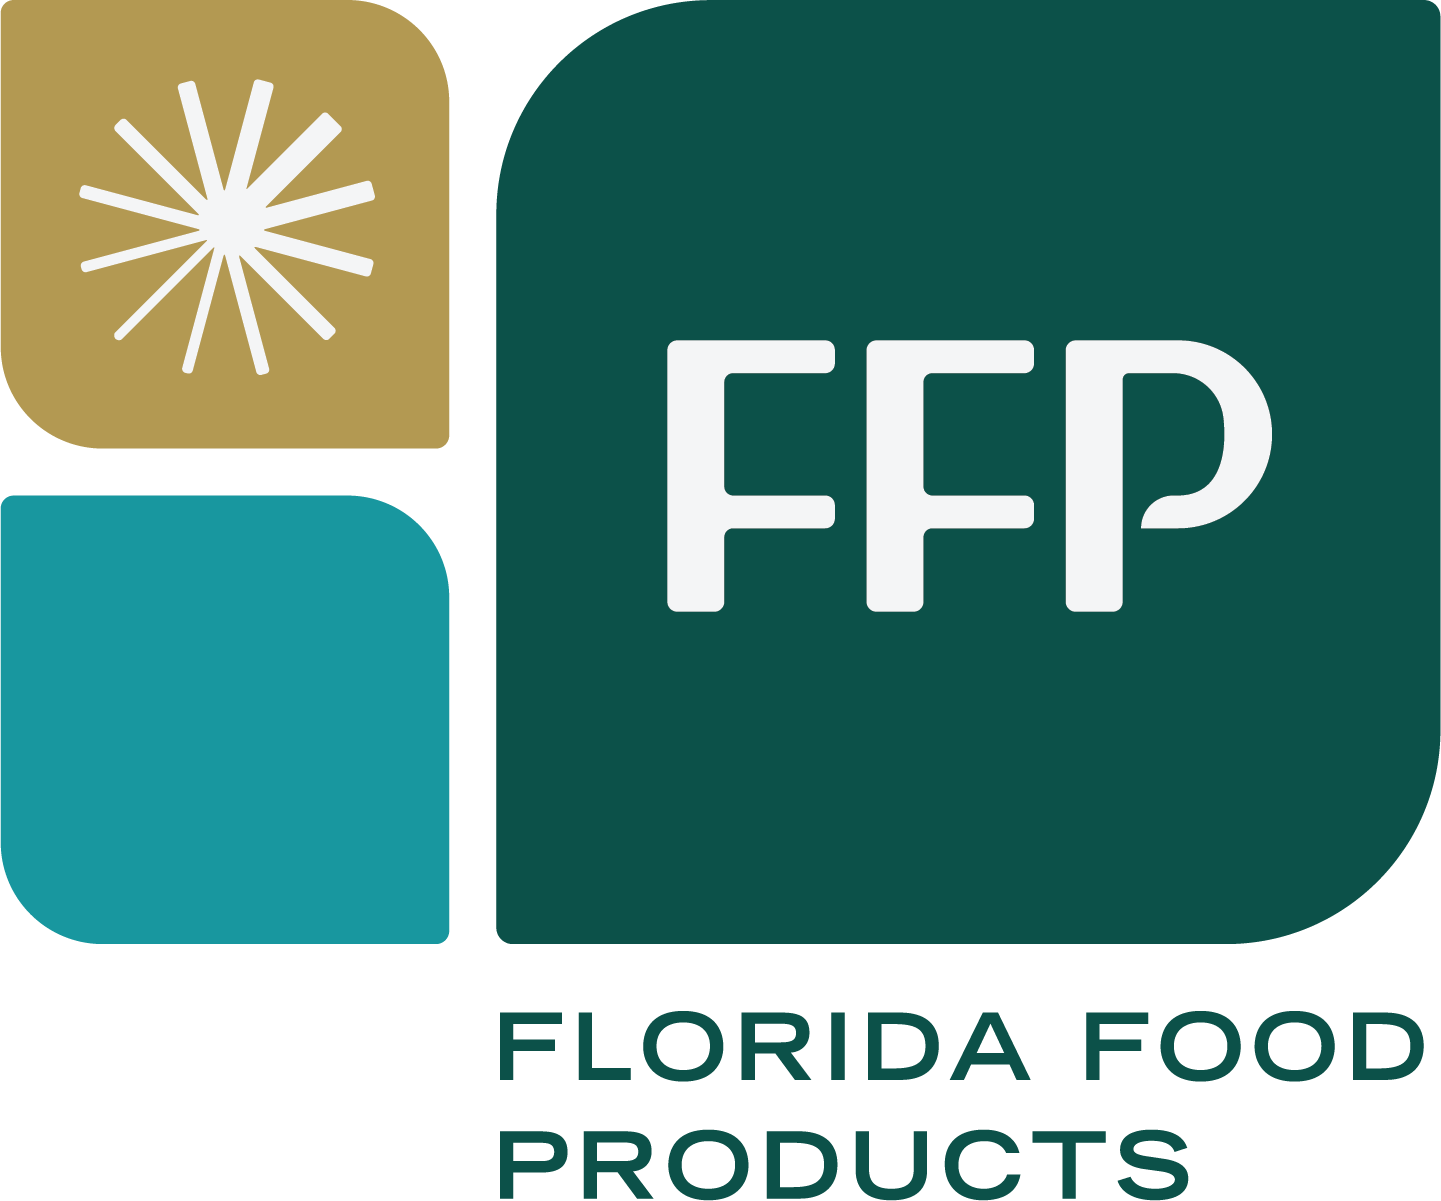 Florida Food Products Acquires Amelia Bay, LLC